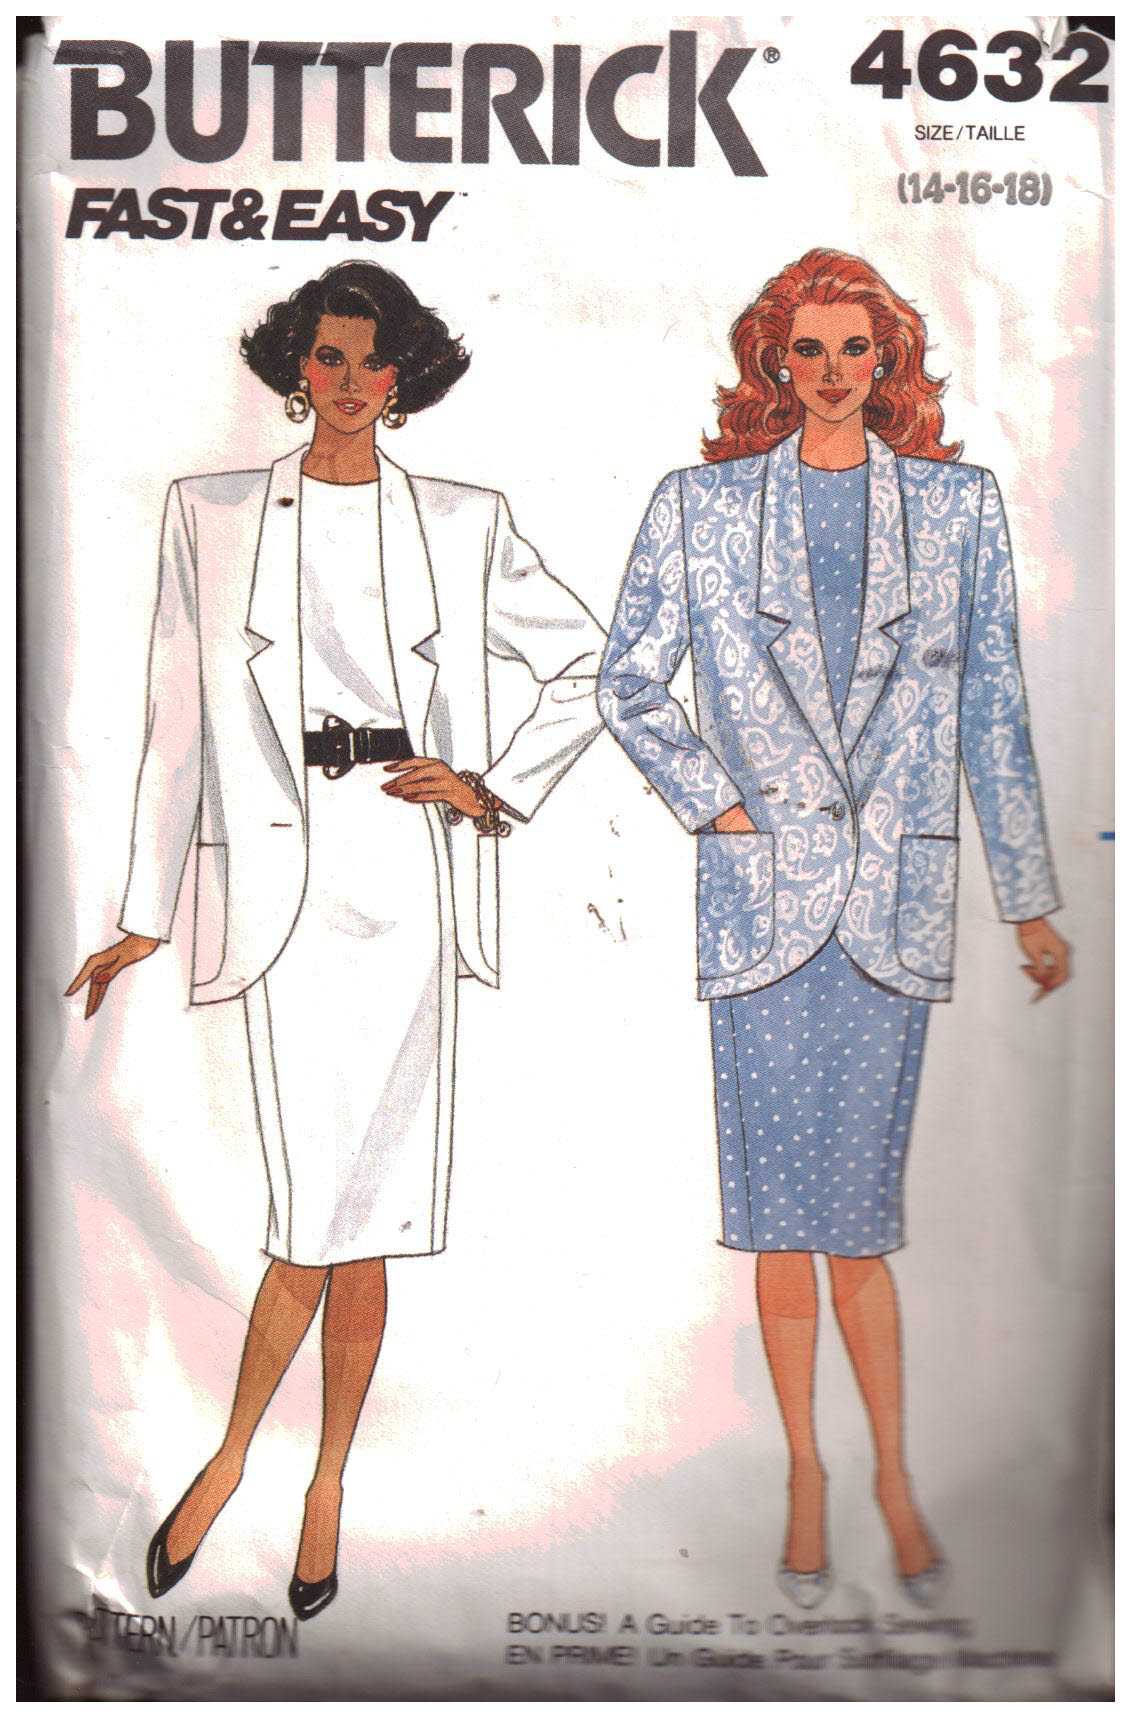 Butterick 4632 Dress, Jacket Size: 14-16-18 Used Sewing Pattern